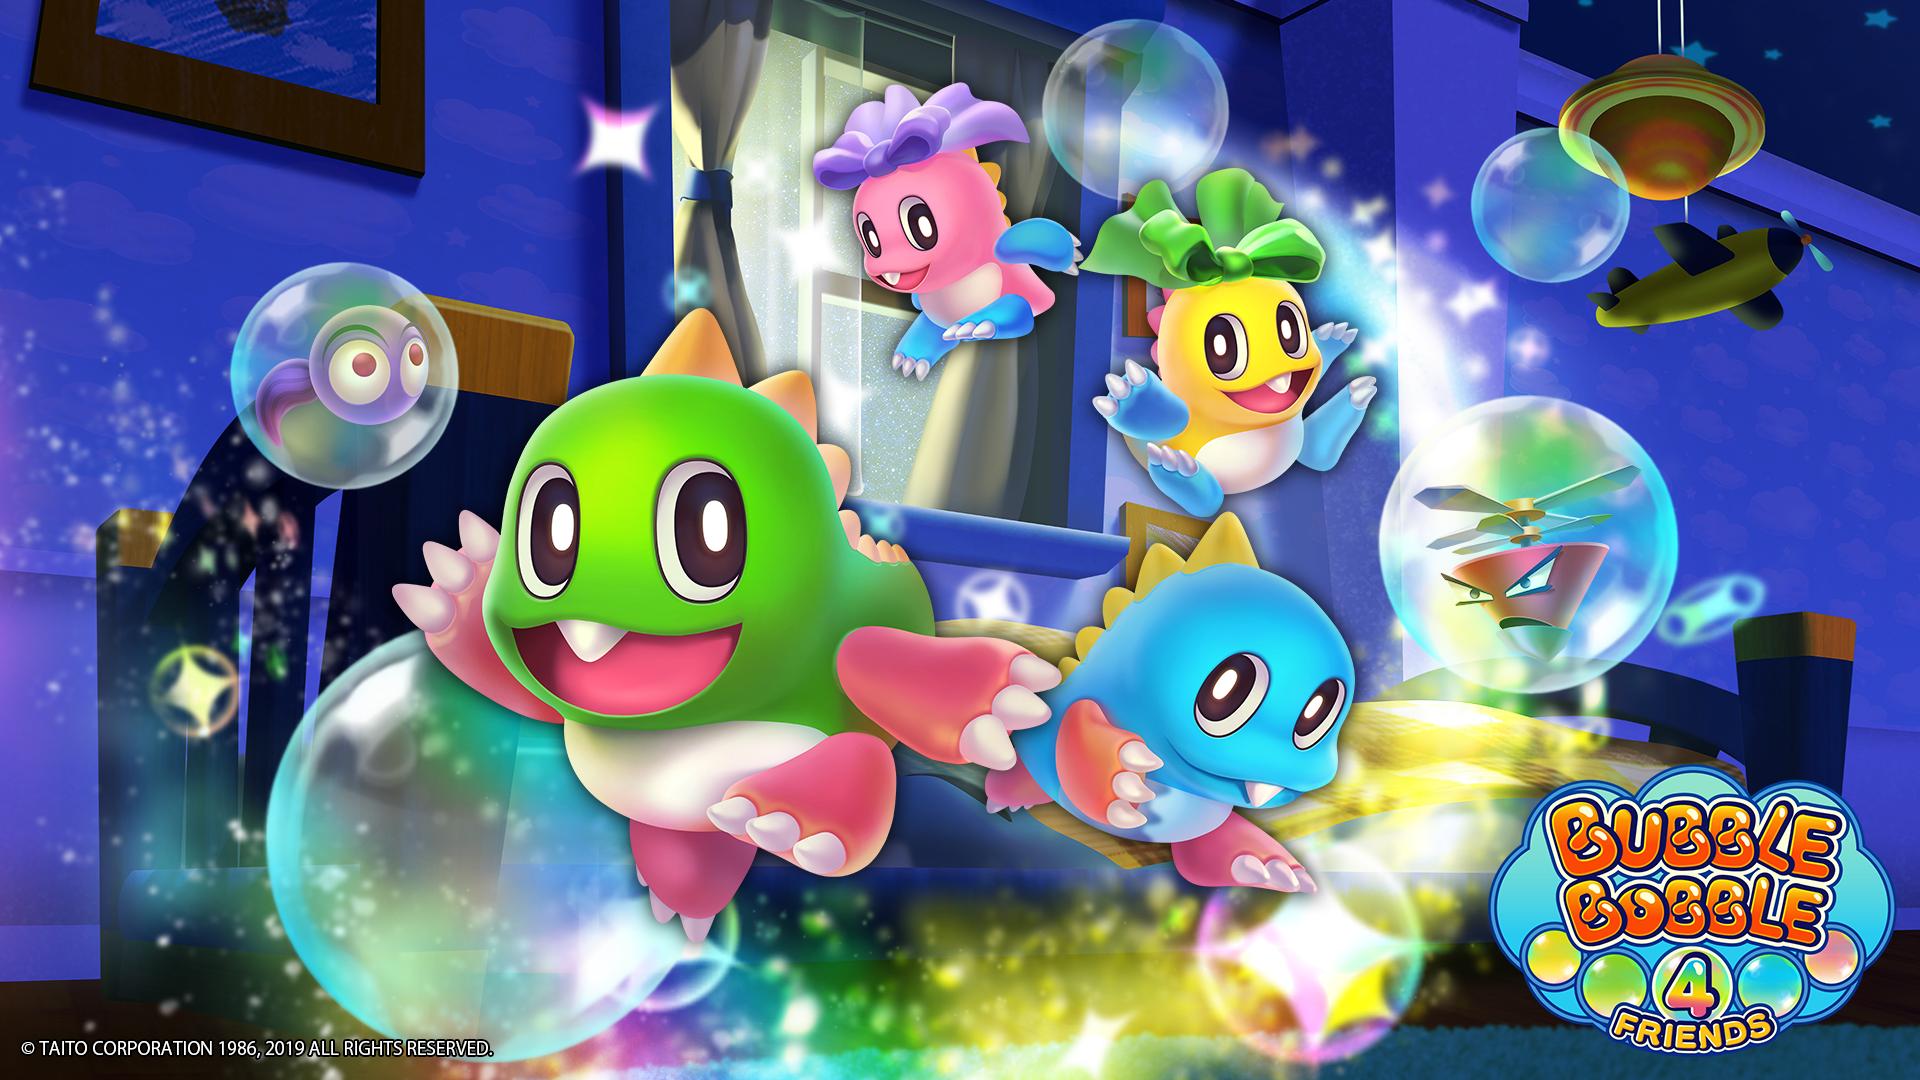 Taito เปิดตัว Bubble Bobble 4 Friends ภาคใหม่ของเกมยิงฟองสบู่ในตำนาน